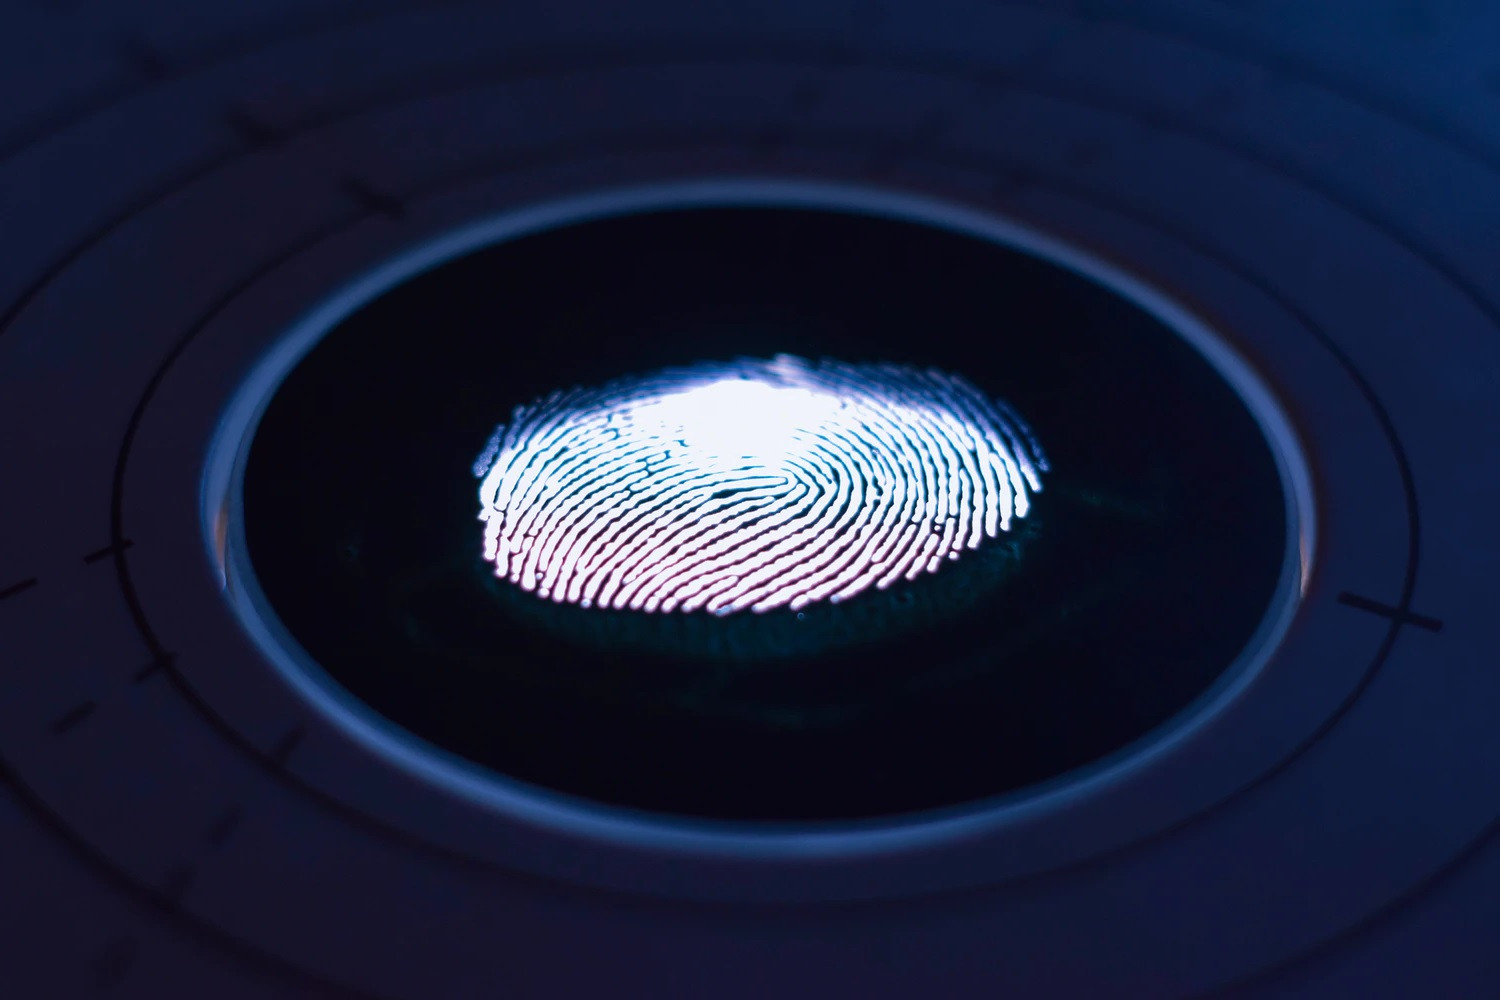 autenticacion biometrica autentificacion huella dactilar reconocimiento facial iris biometric autenthication manusa automatic door